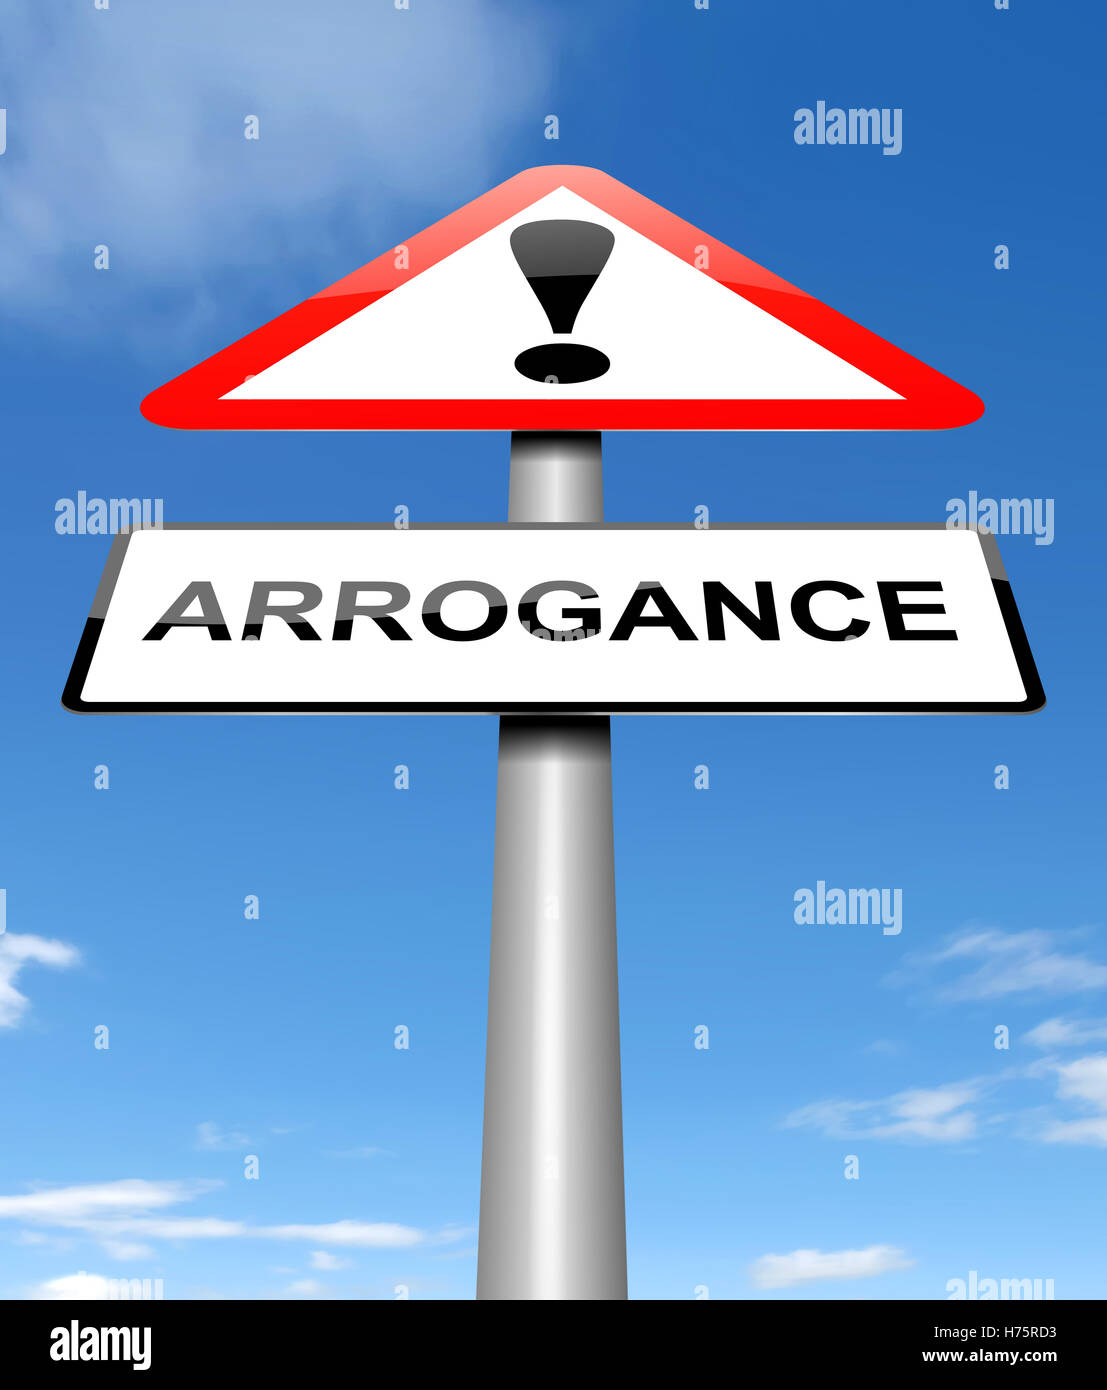 Arrogance concept. Stock Photo